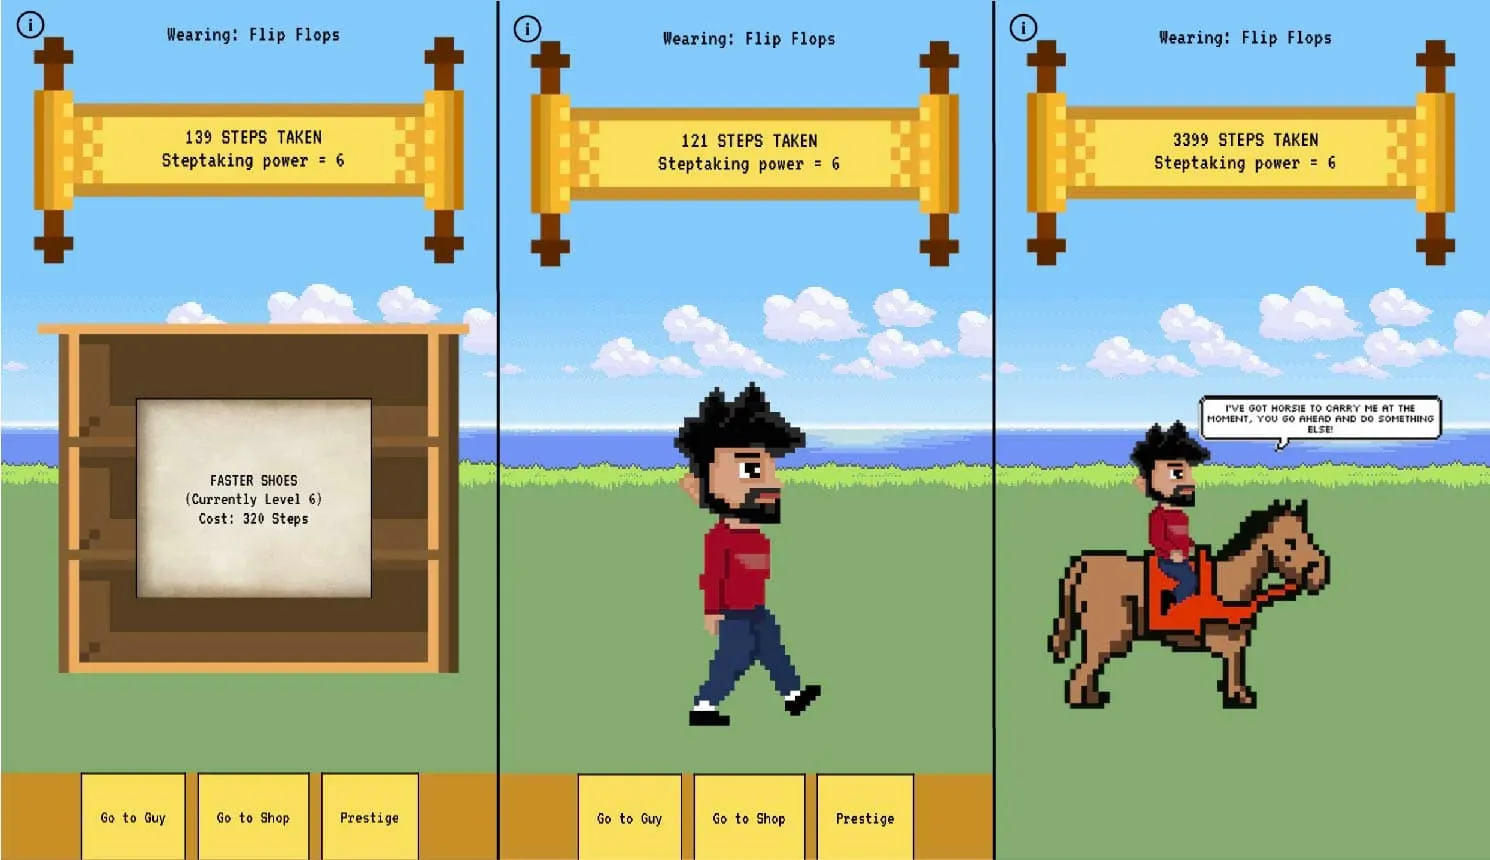 The three major scenes of the prototype game